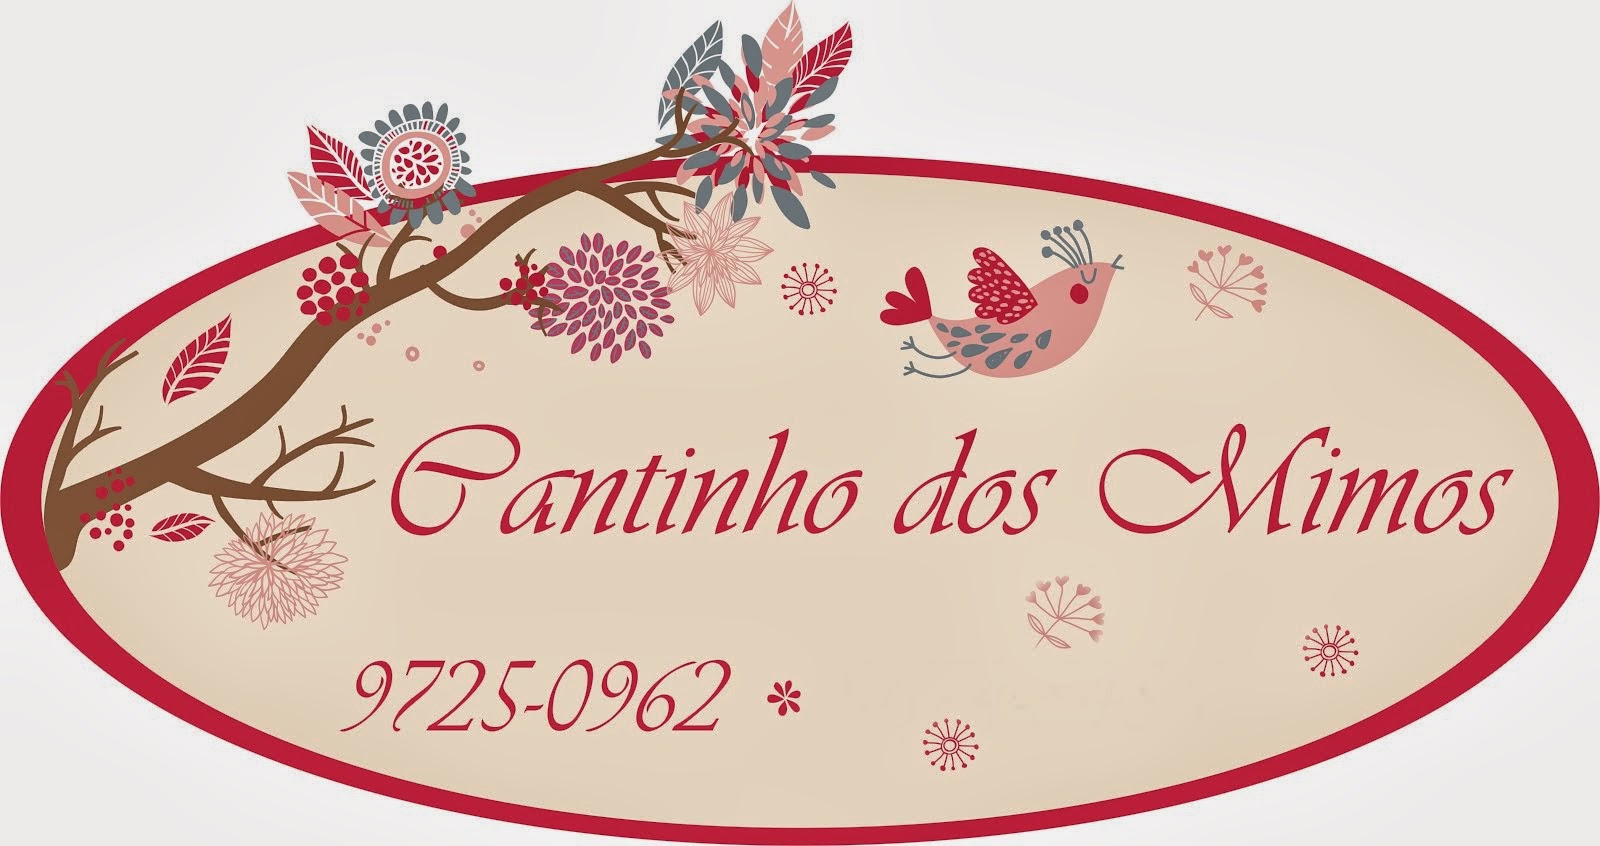 Cantinho dos Mimos Logo